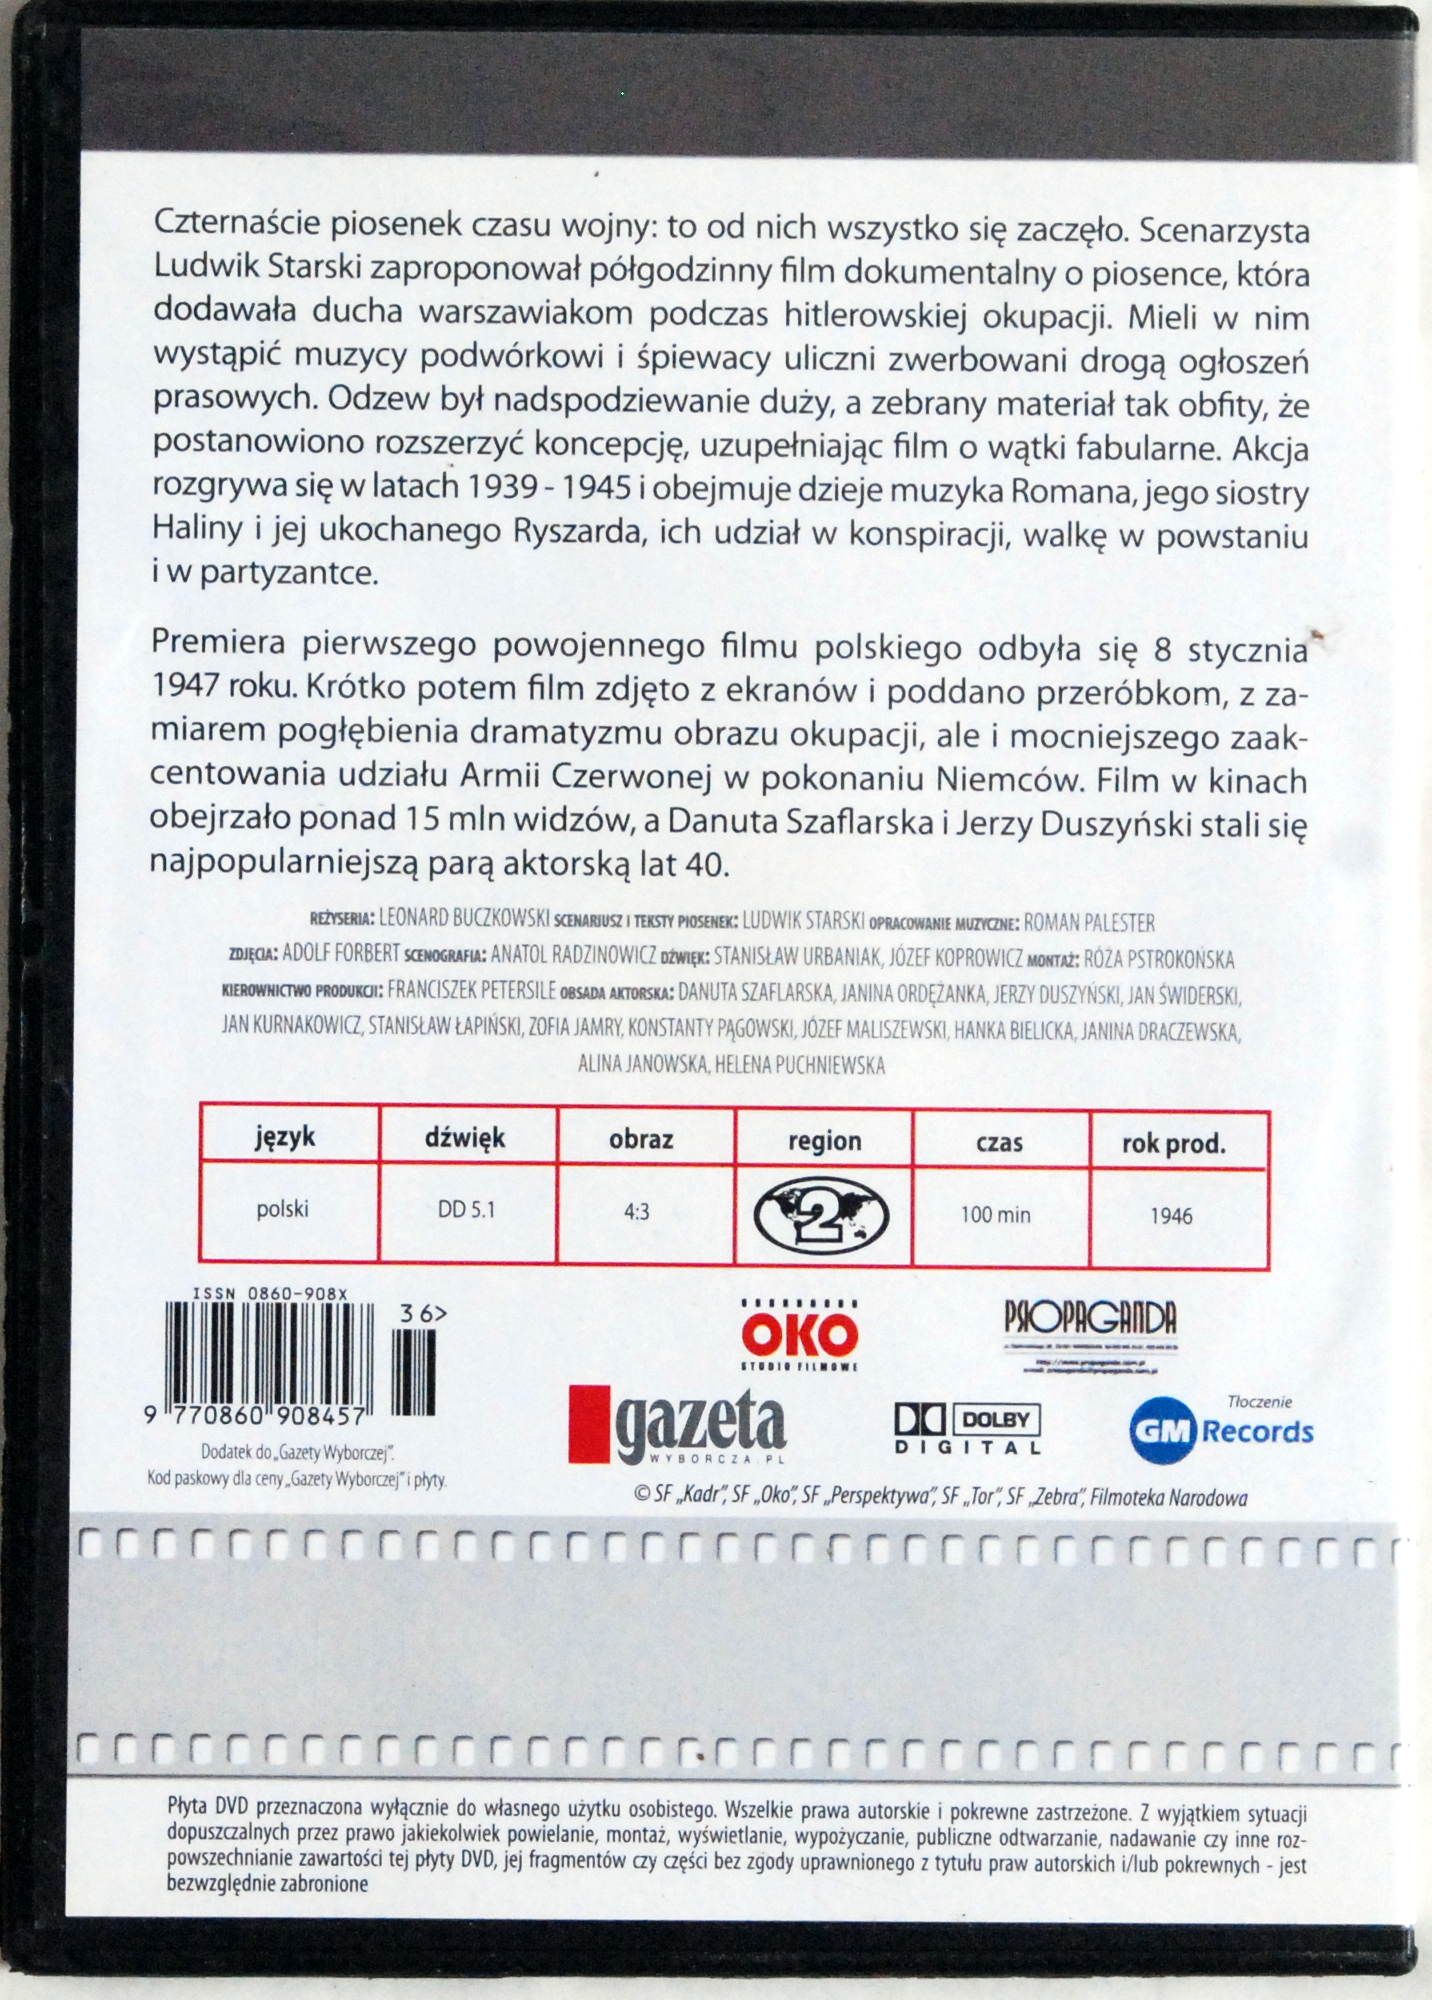 DVD Zakazane Piosenki s.BDB